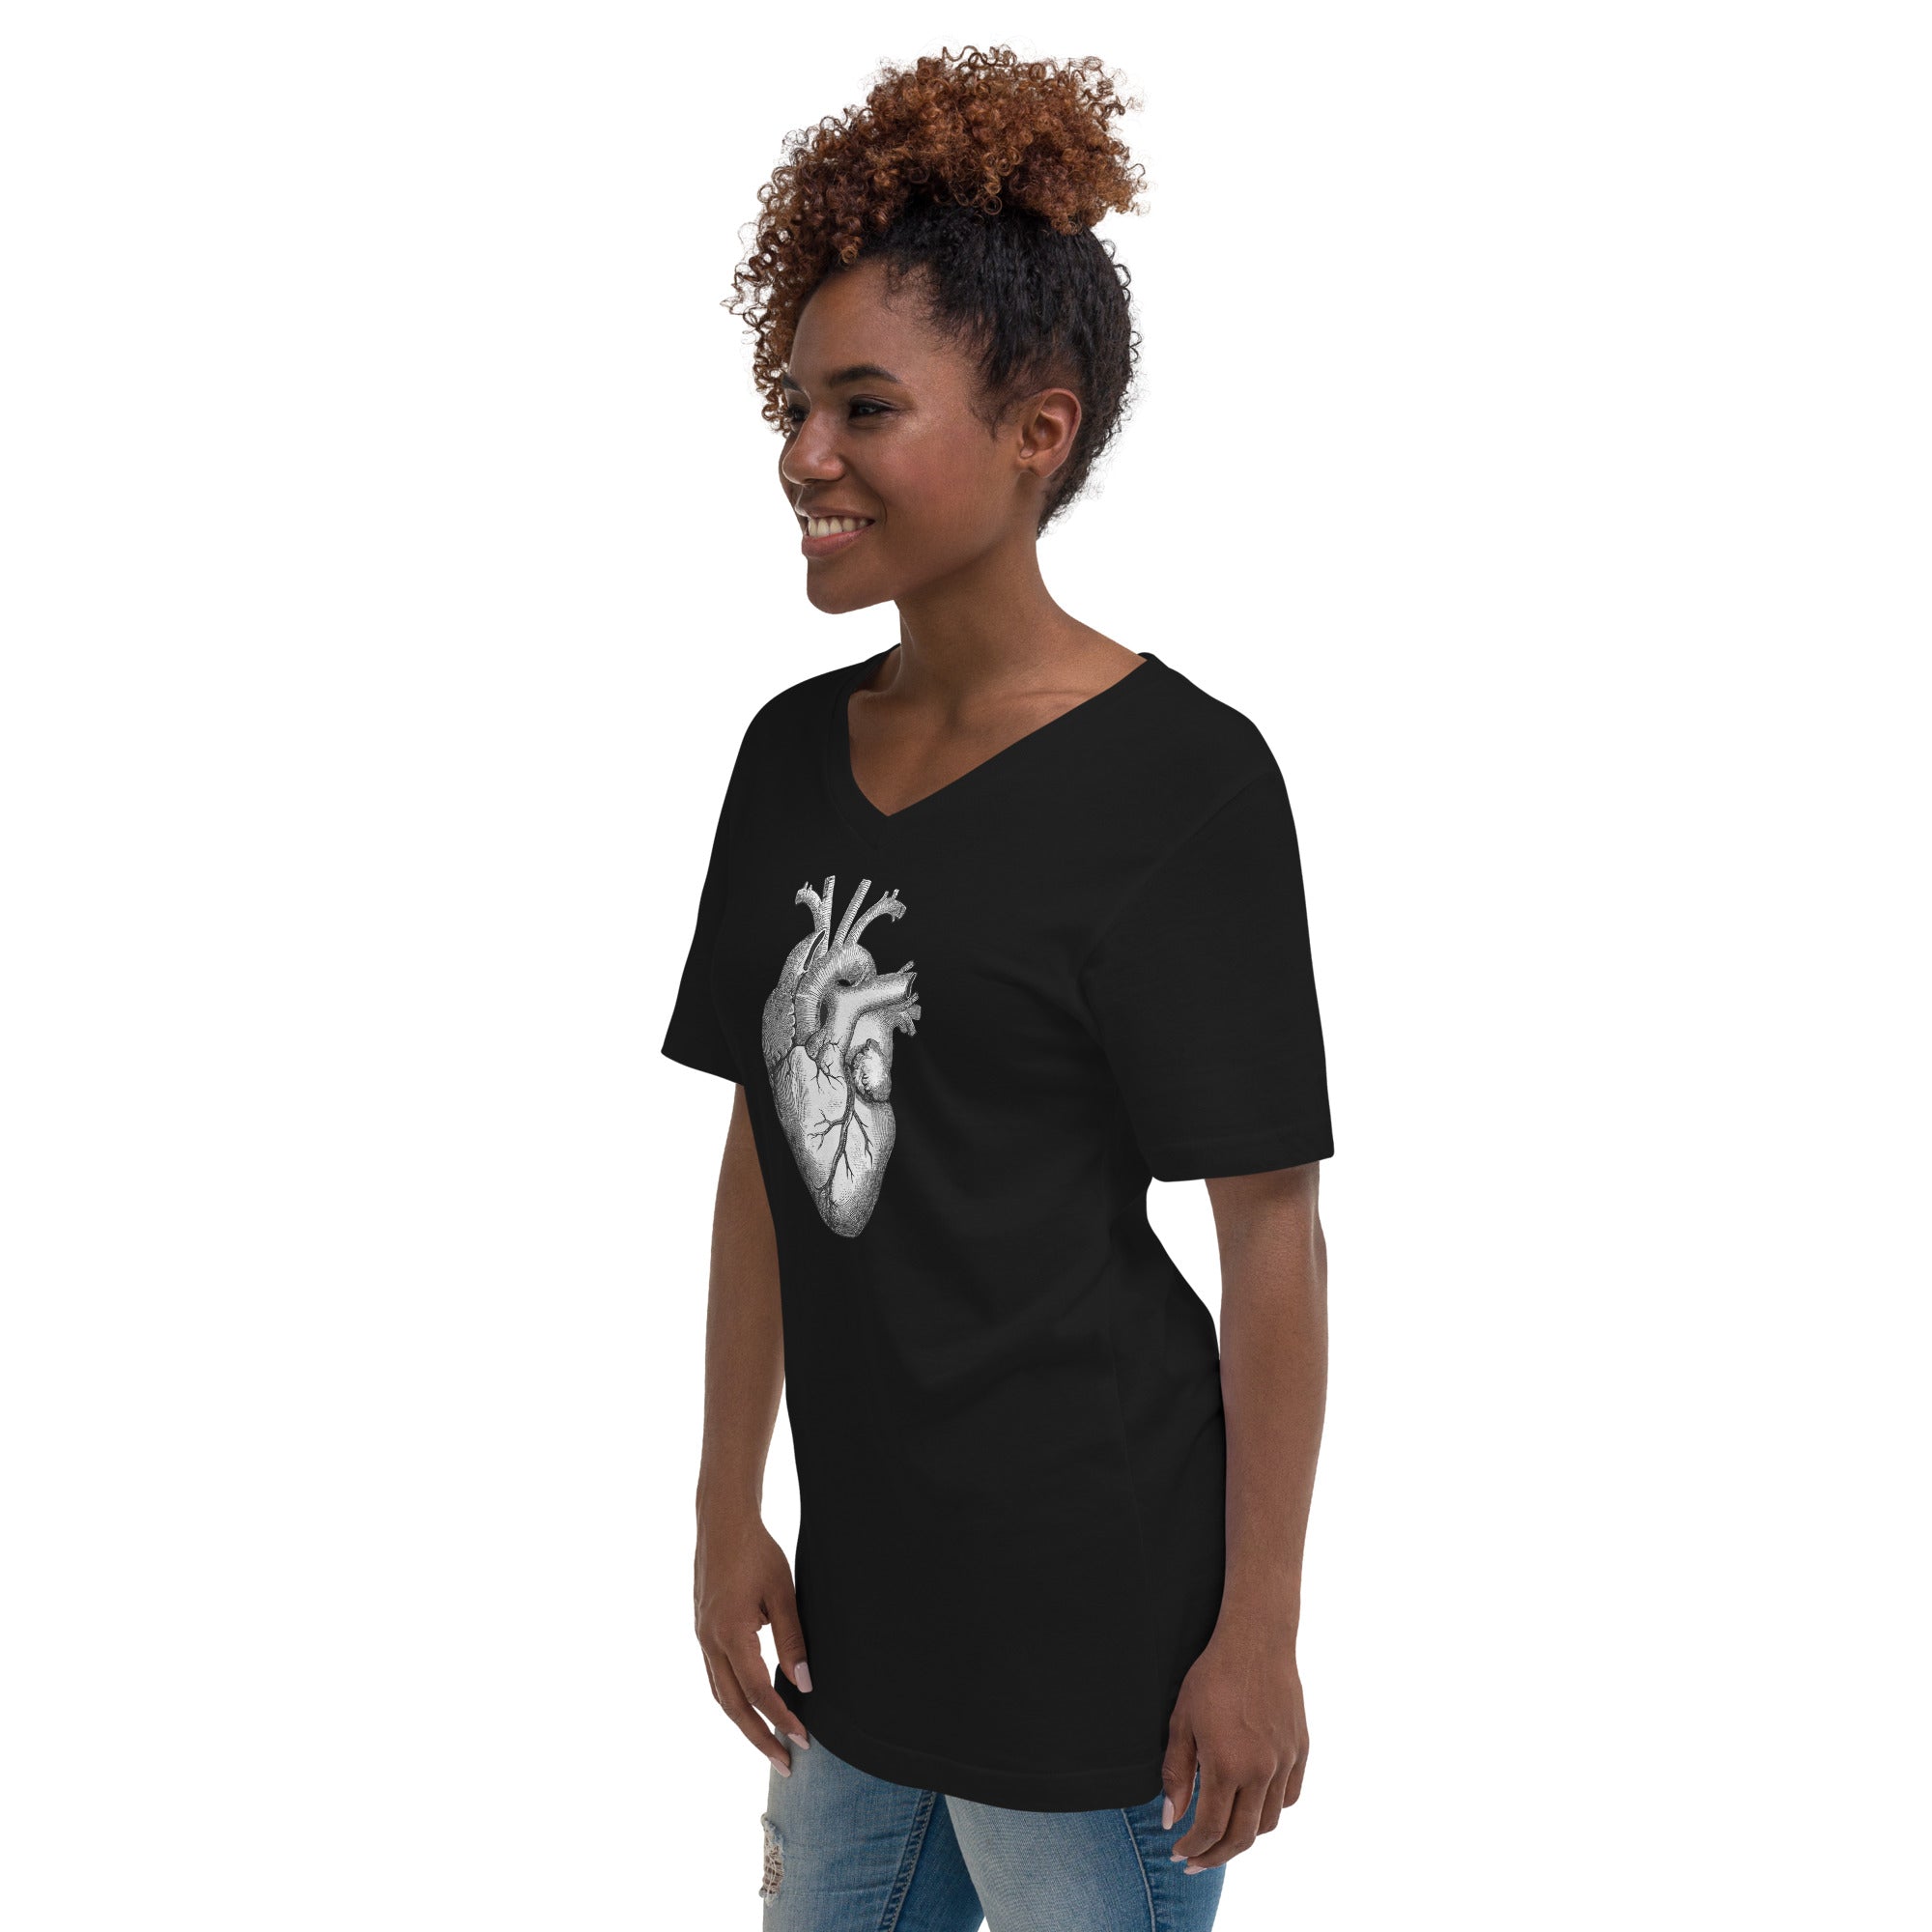 Anatomical Human Heart Medical Art Women’s Short Sleeve V-Neck T-Shirt Black and White - Edge of Life Designs